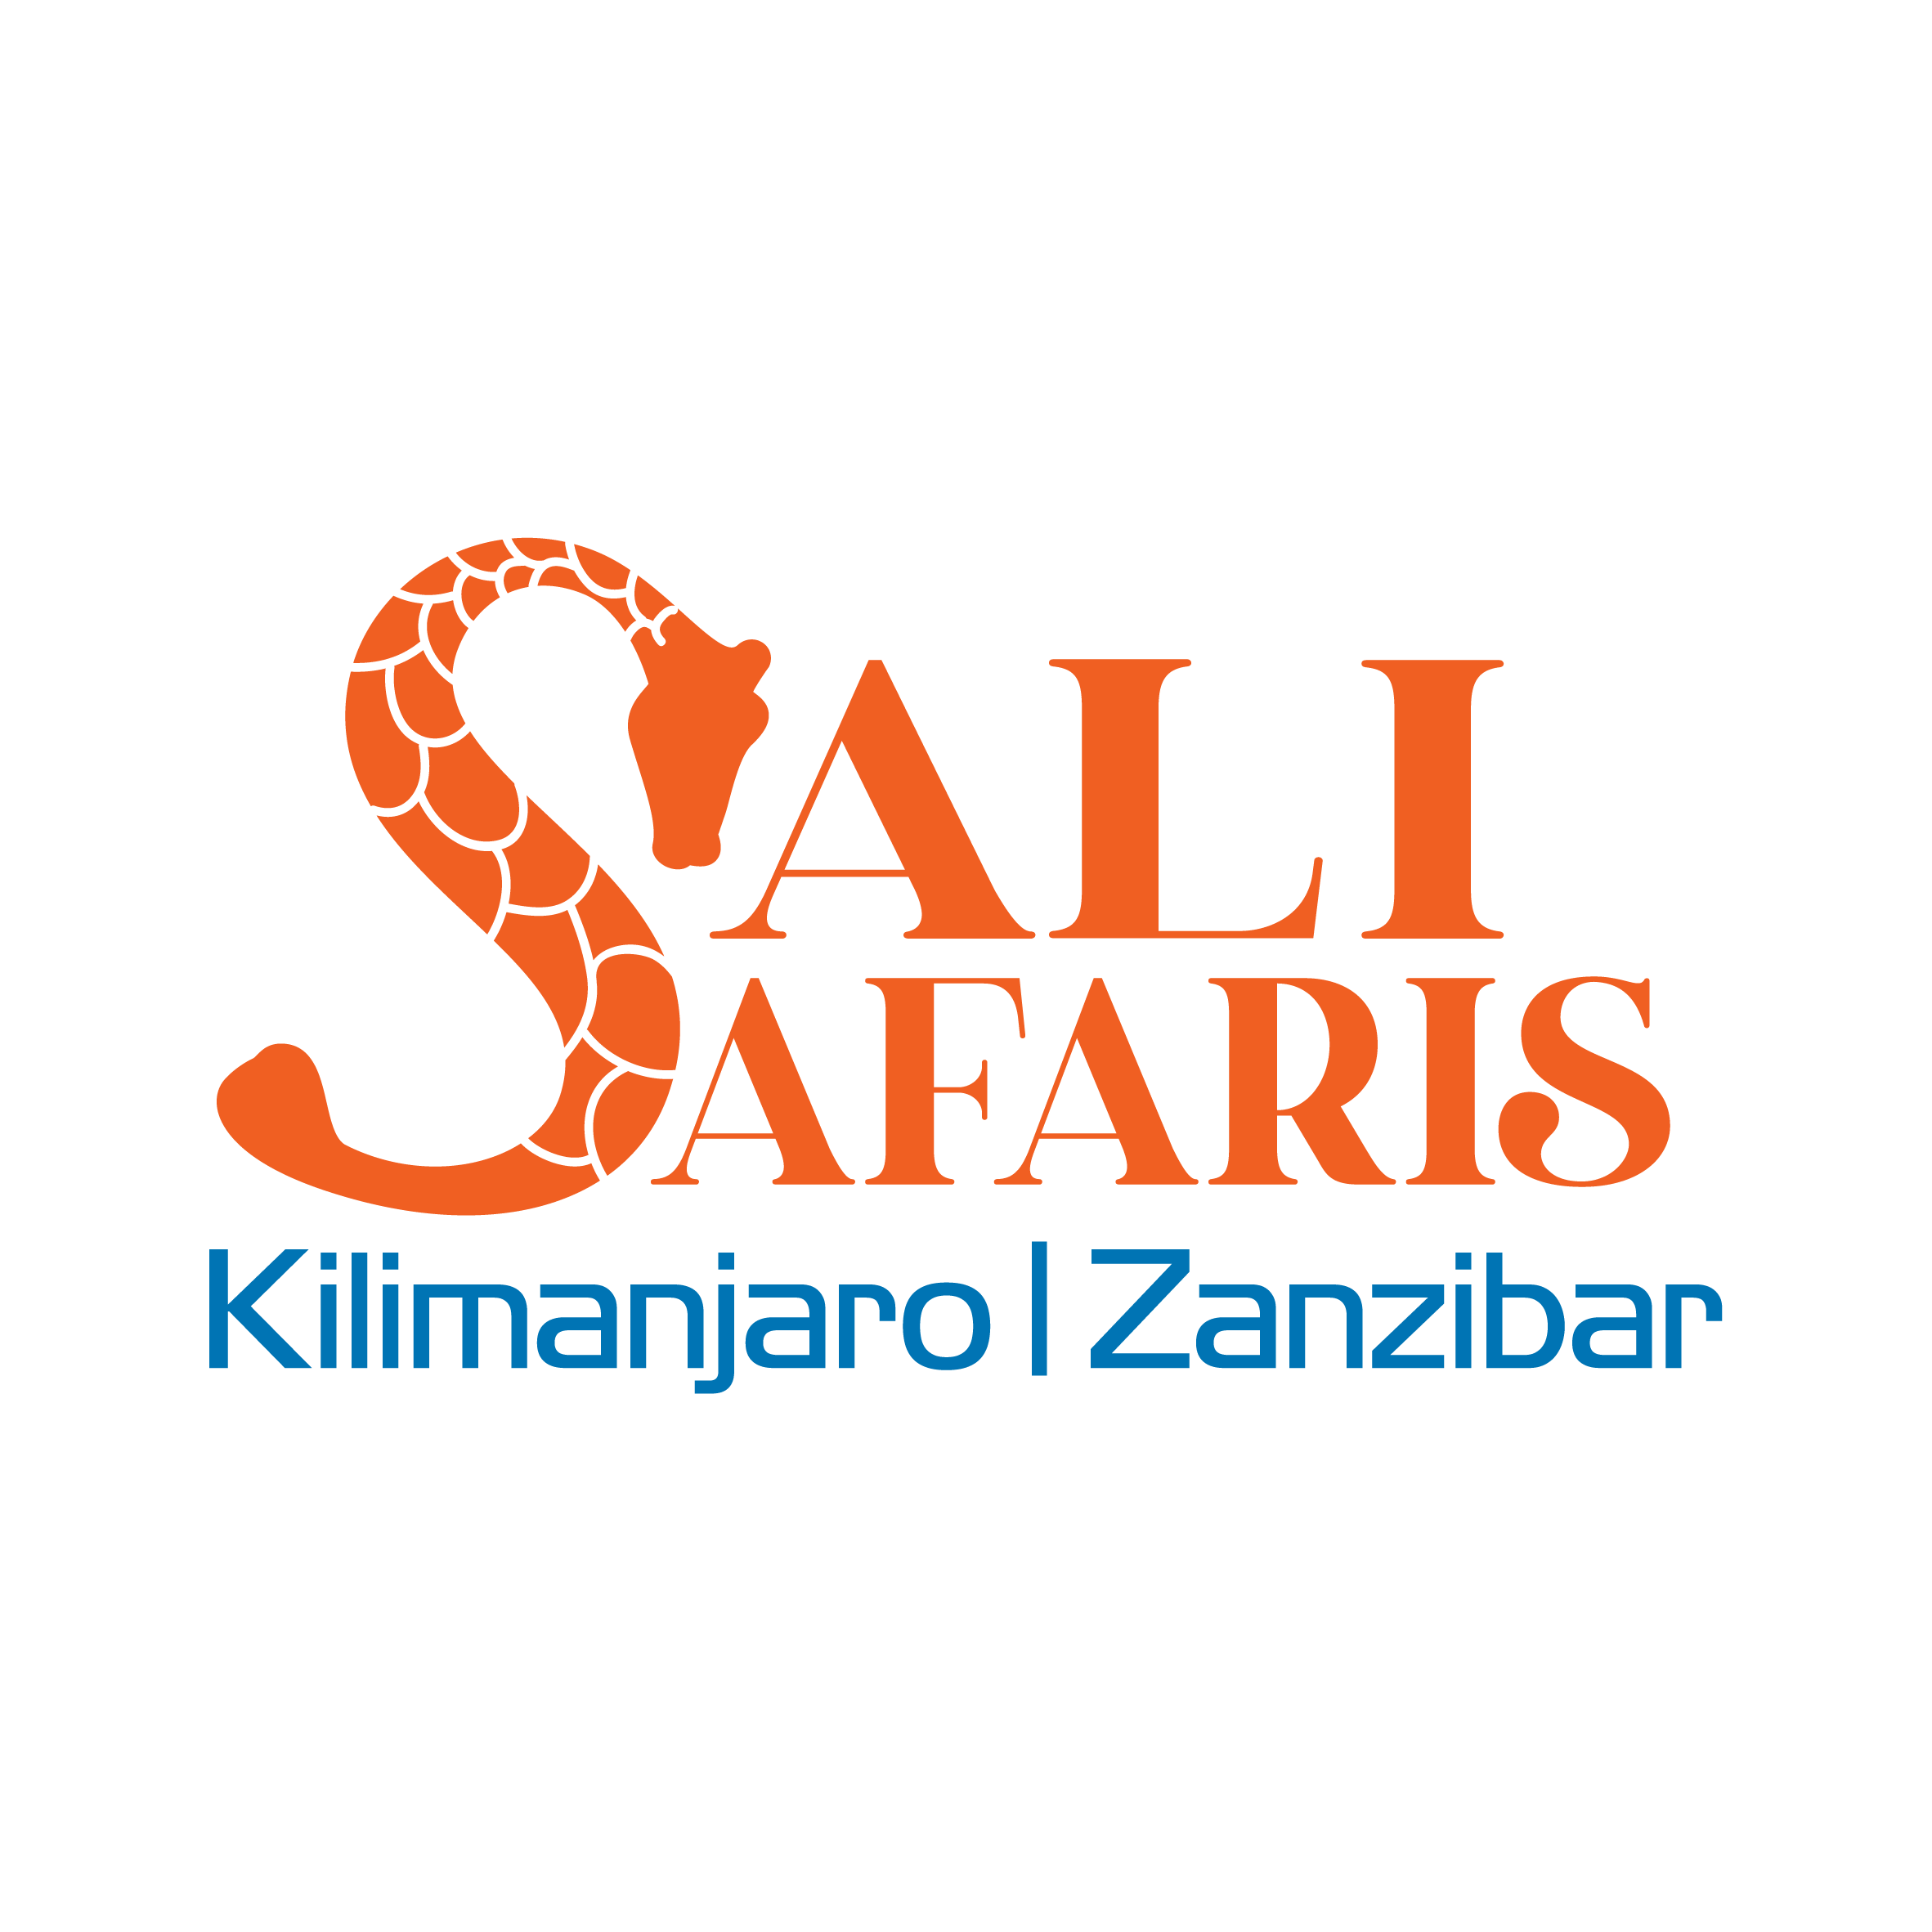 SaliSafaris